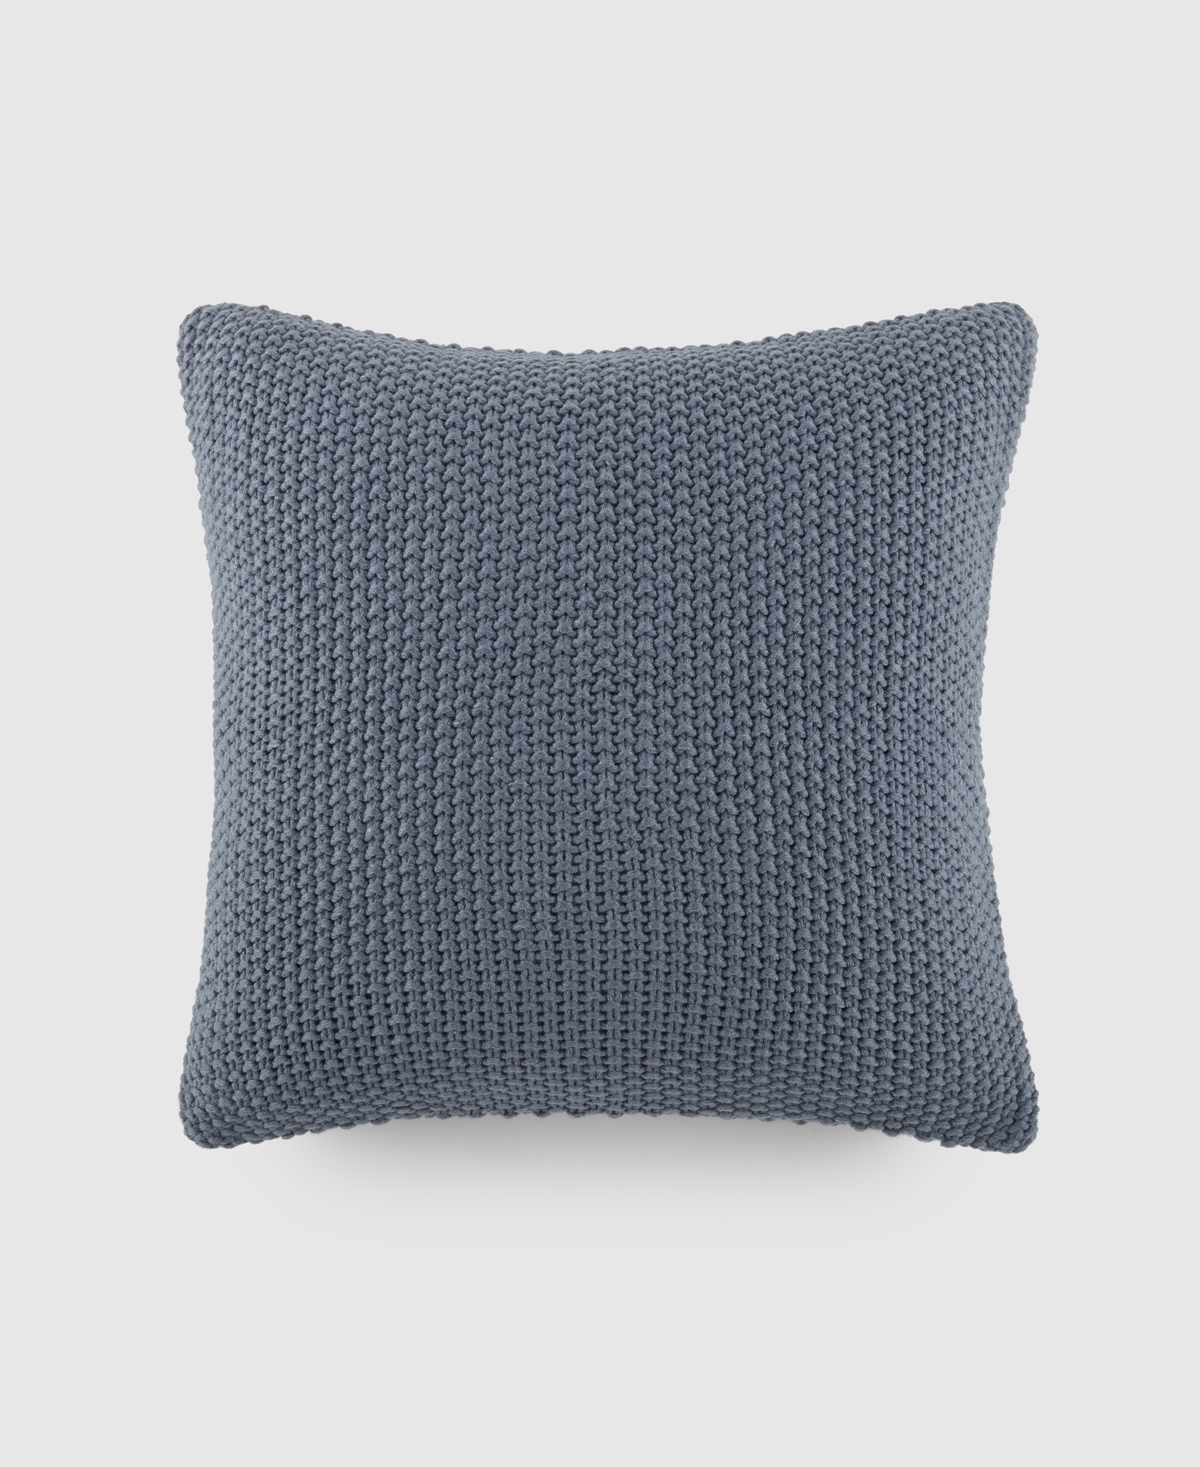 Ienjoy Home Stitch Knit Decorative Pillow, 20" X 20" In Light Blue